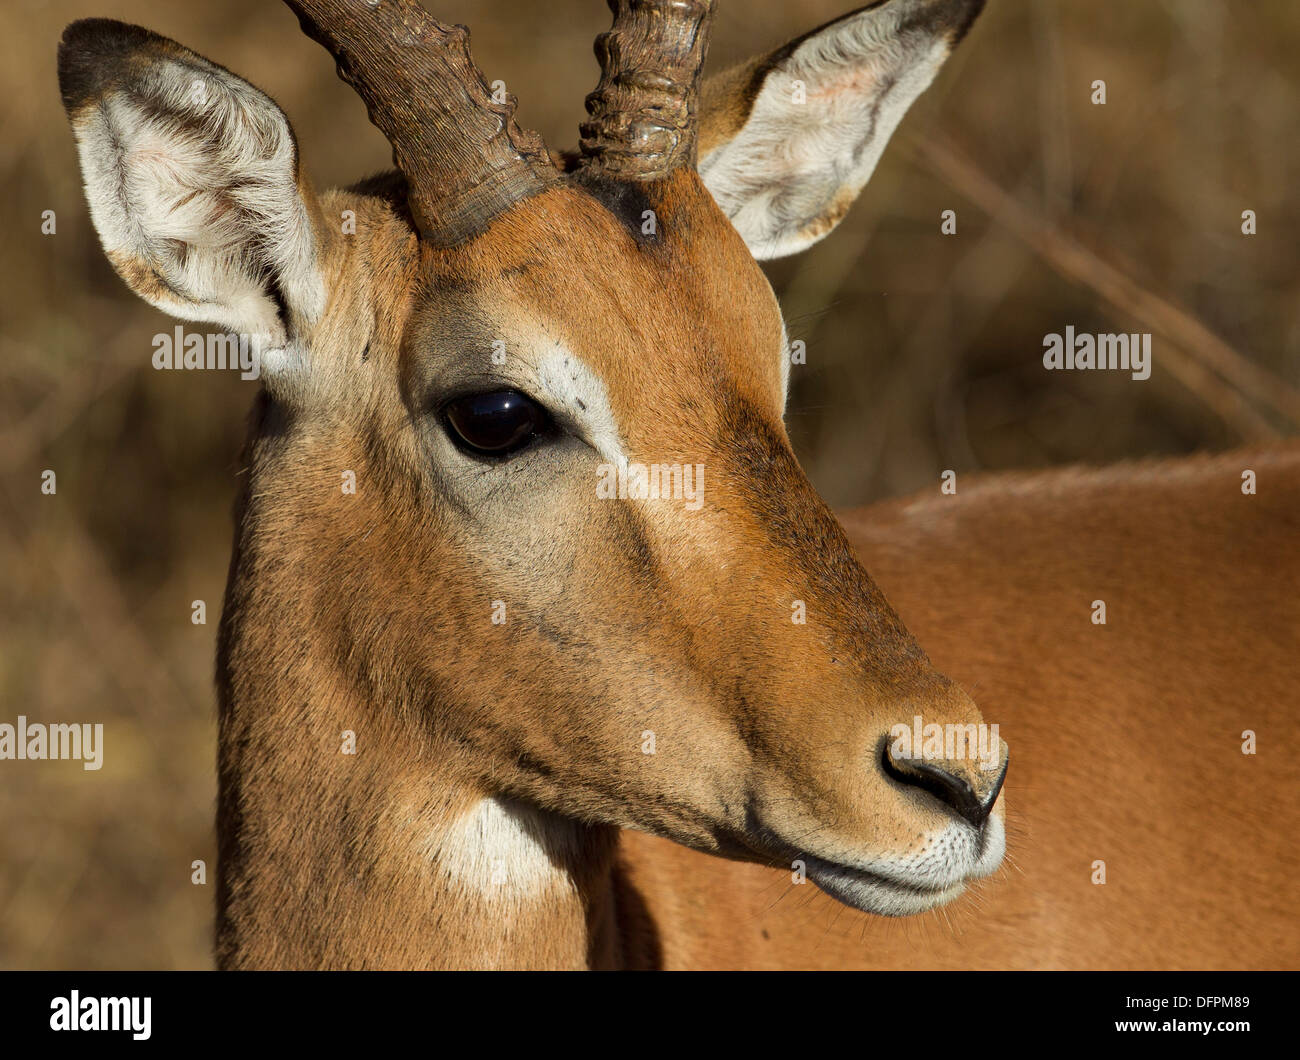 Impala a medium sized antelope, Kruger Park, South Africa, Stock Photo